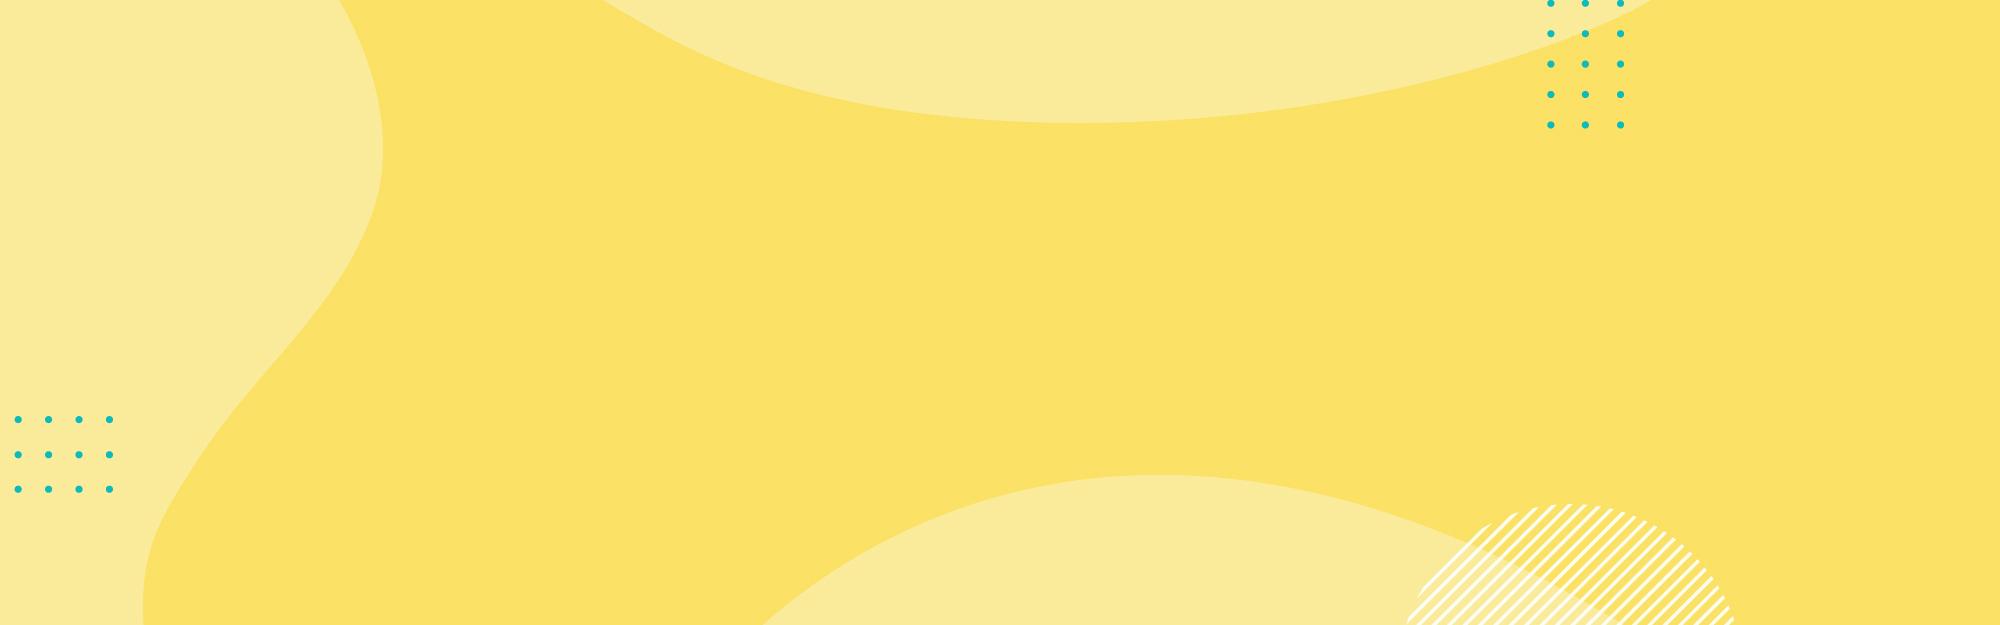 Graphic yellow background